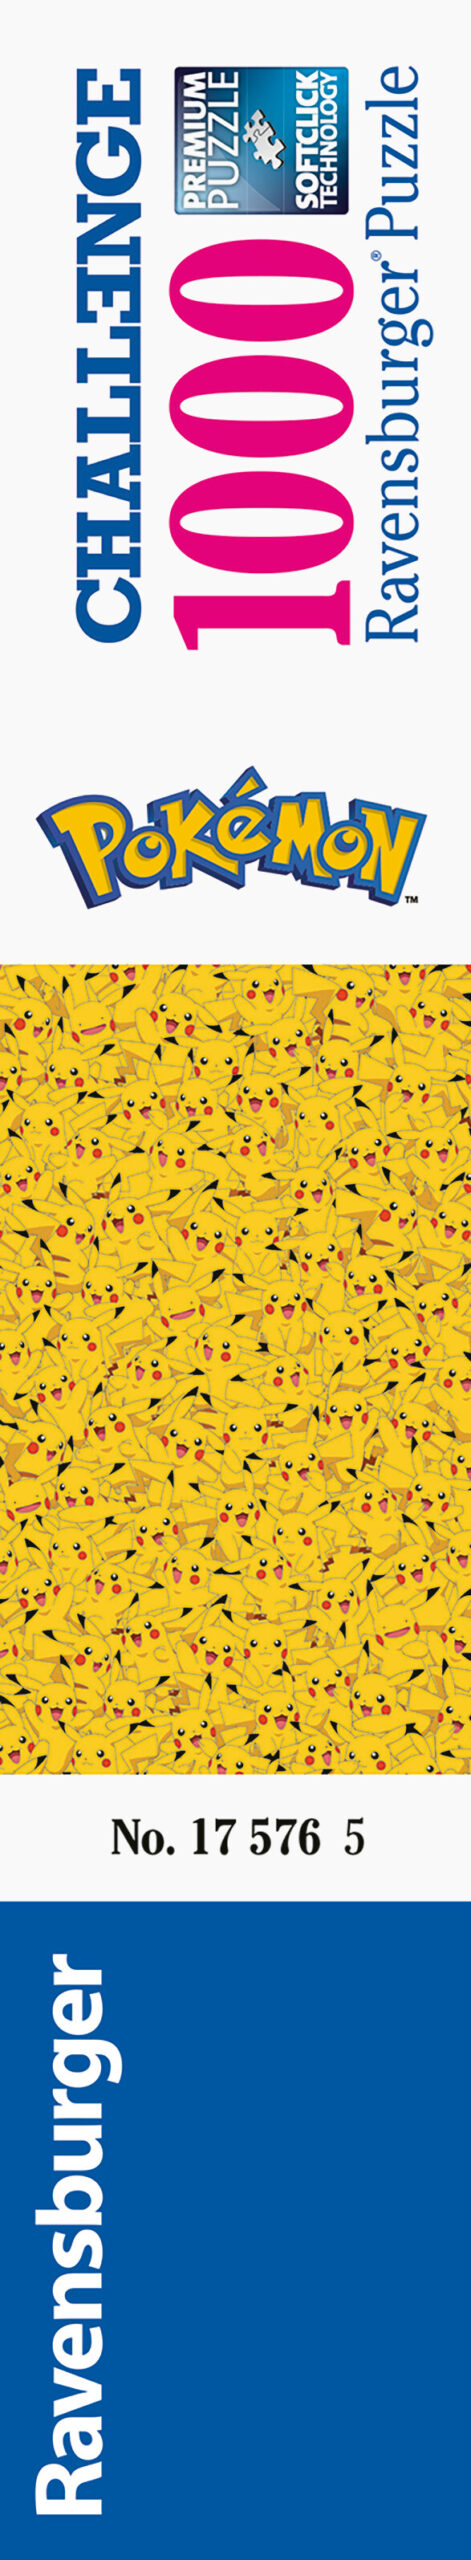 Ravensburger - puzzle pikachu challenge, 1000 pezzi, puzzle adulti - POKEMON, RAVENSBURGER